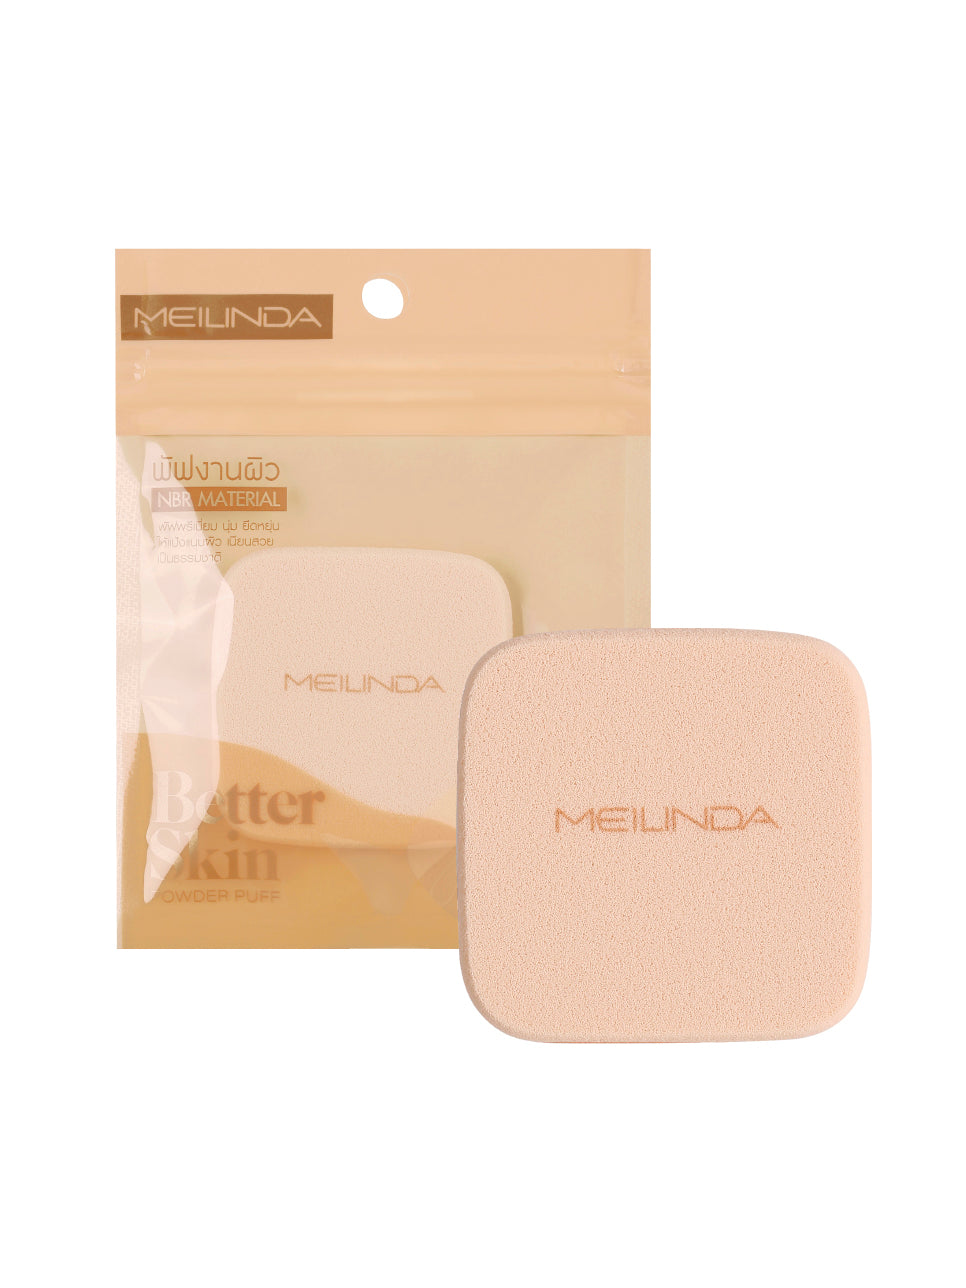 Meilinda Better Skin Powder Puff MC5088 (Thai)